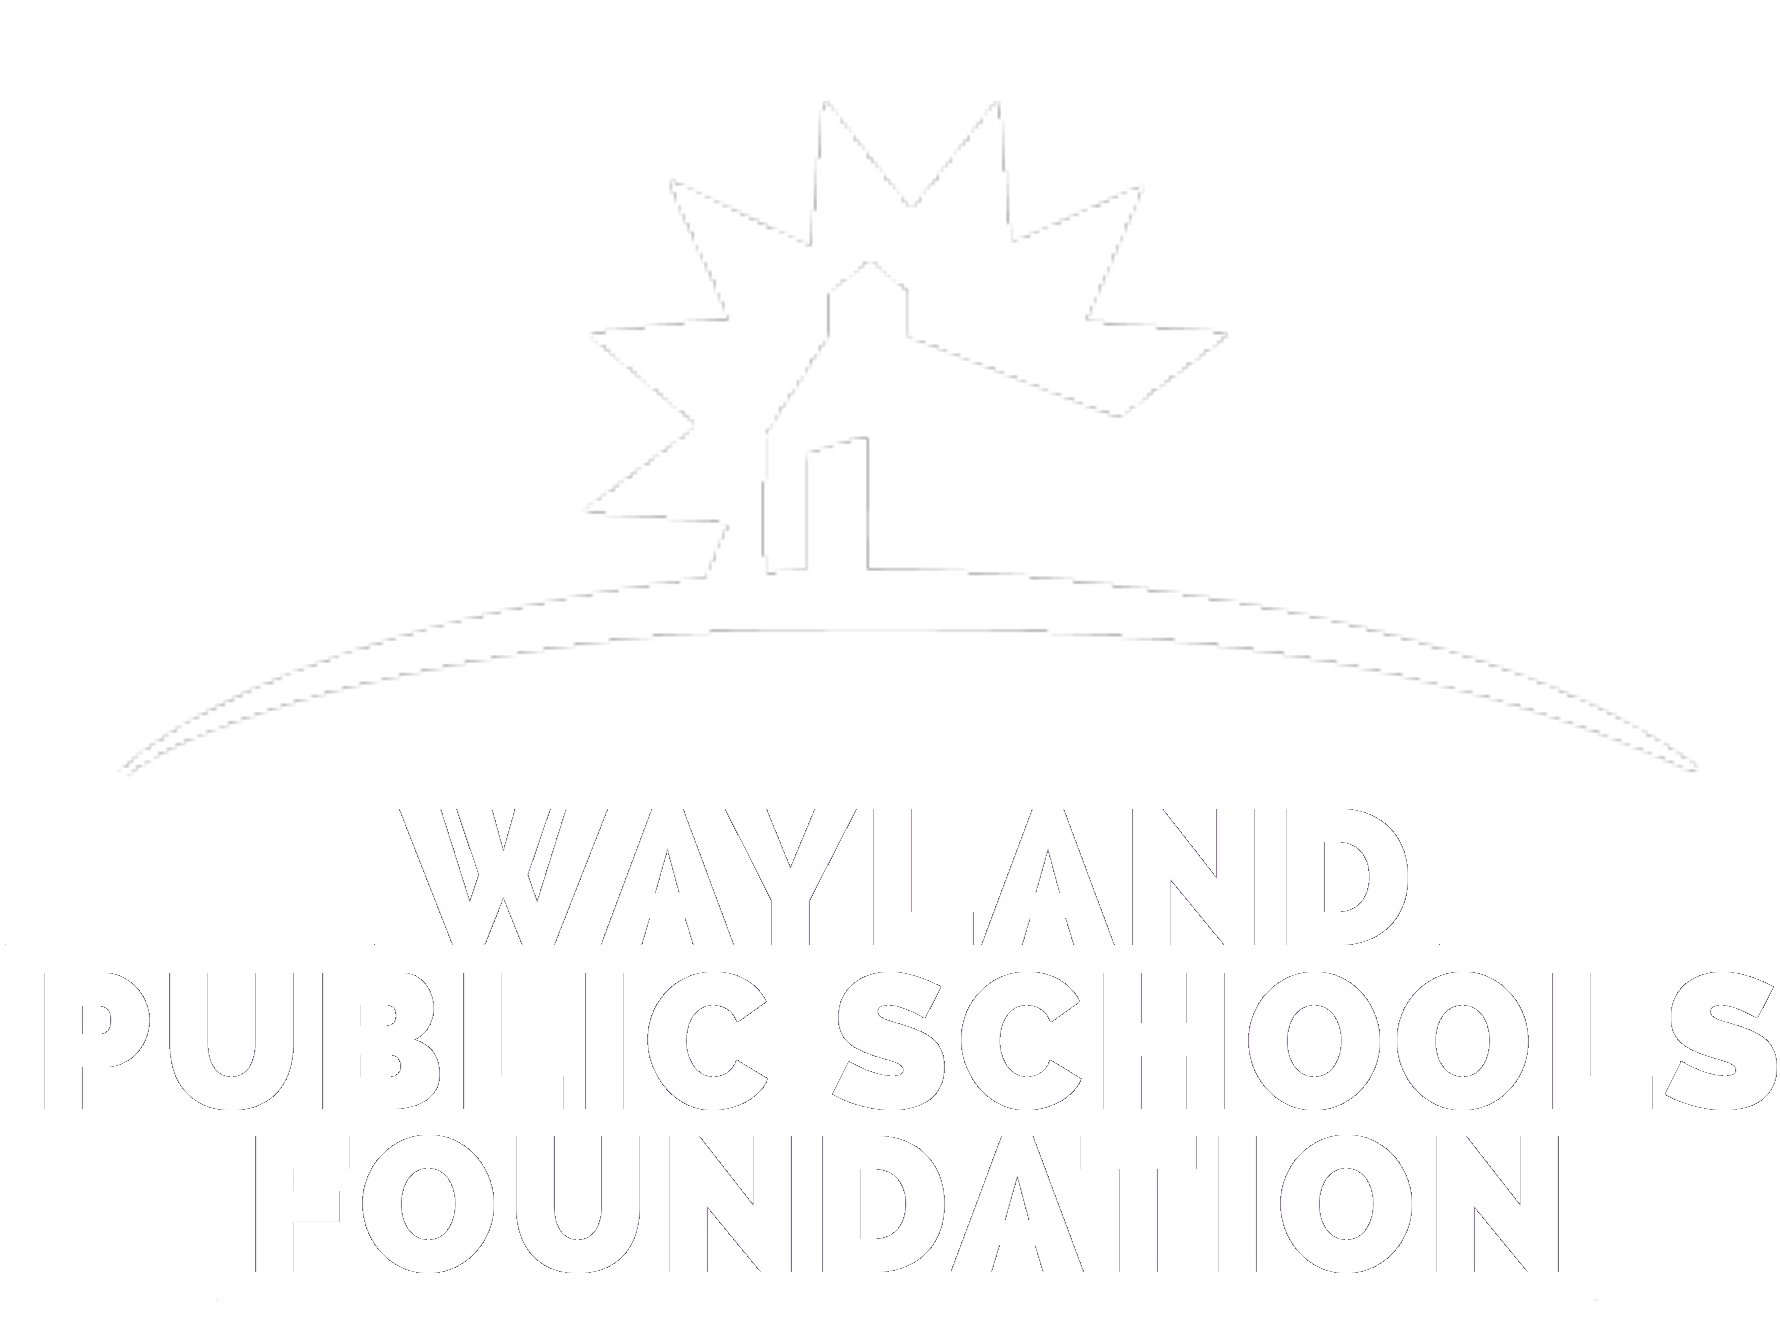 Wayland Public Schools Foundation